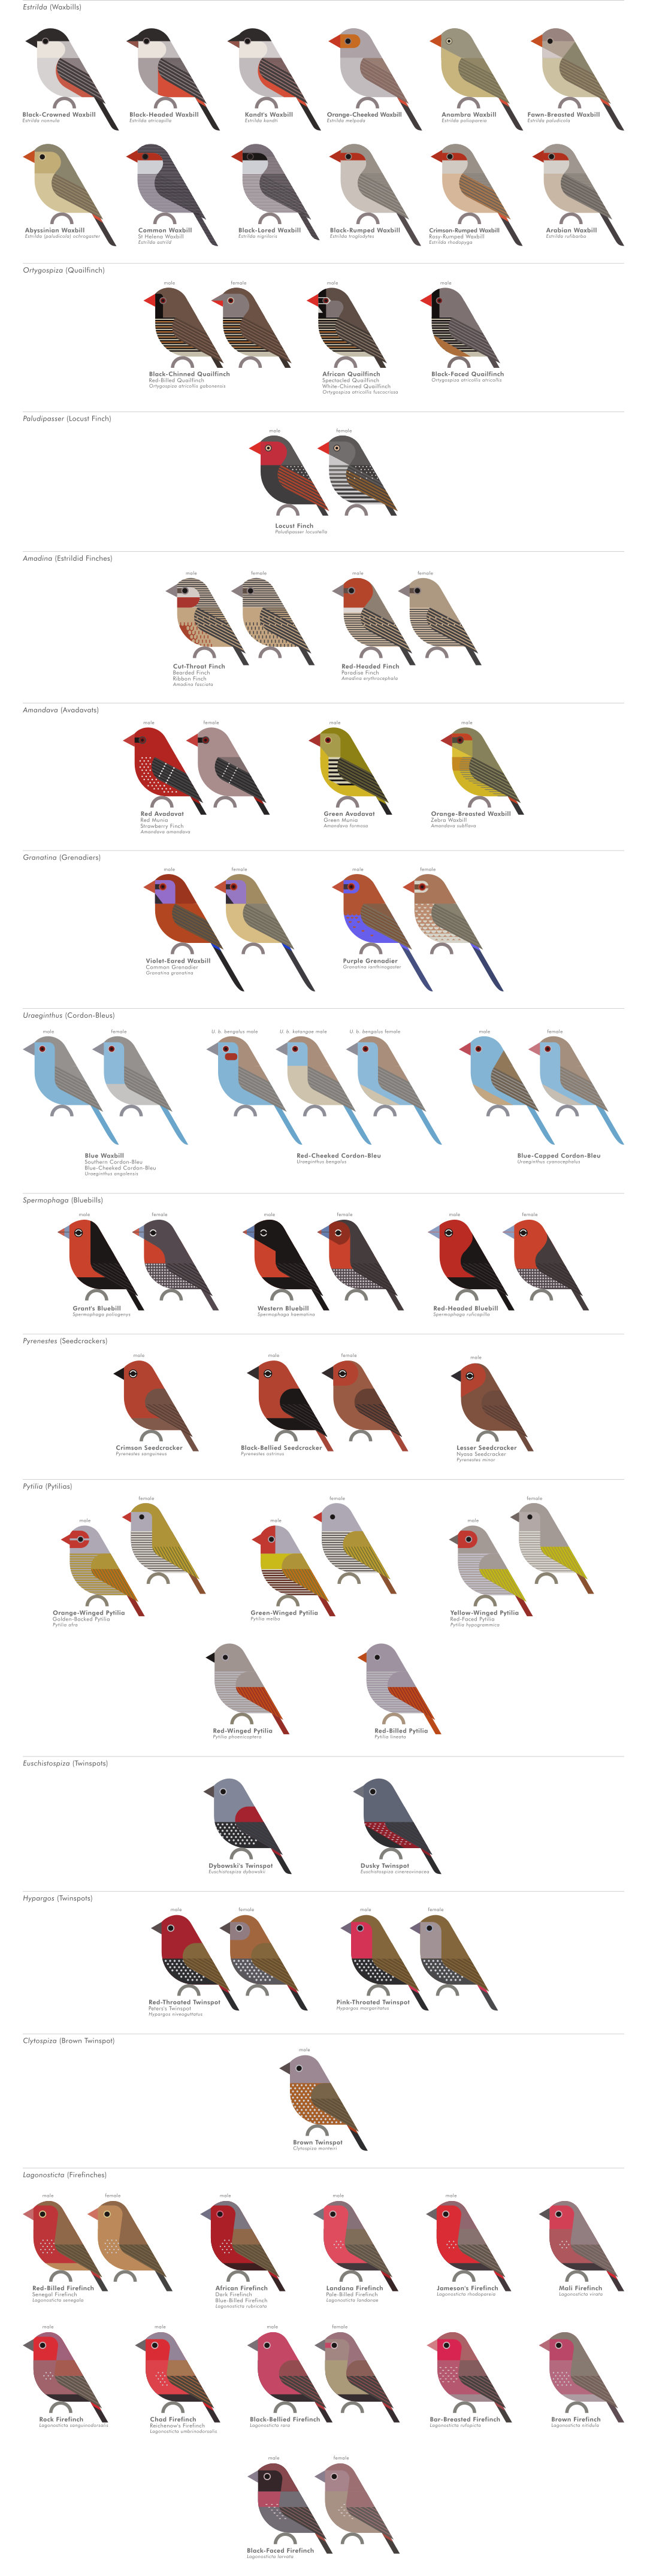 scott partridge - AVE - avian vector encyclopedia - waxbills - bird vector art